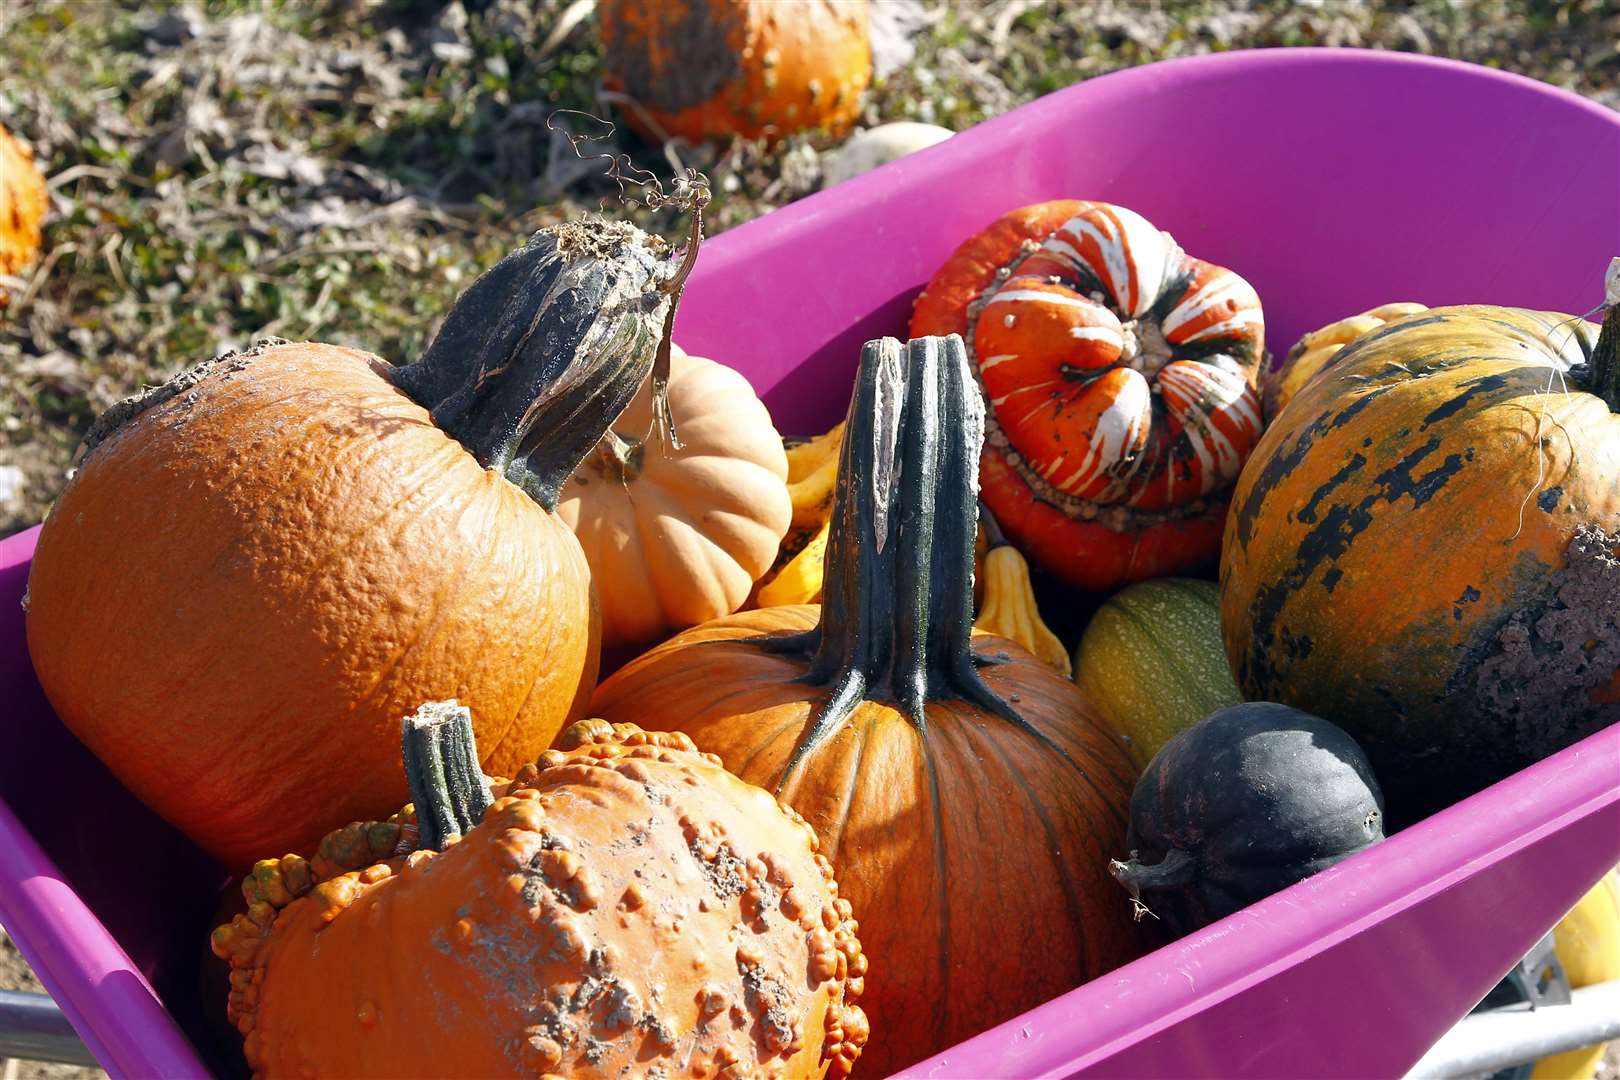 Take the kids to pick a pumpkin ahead of Halloween